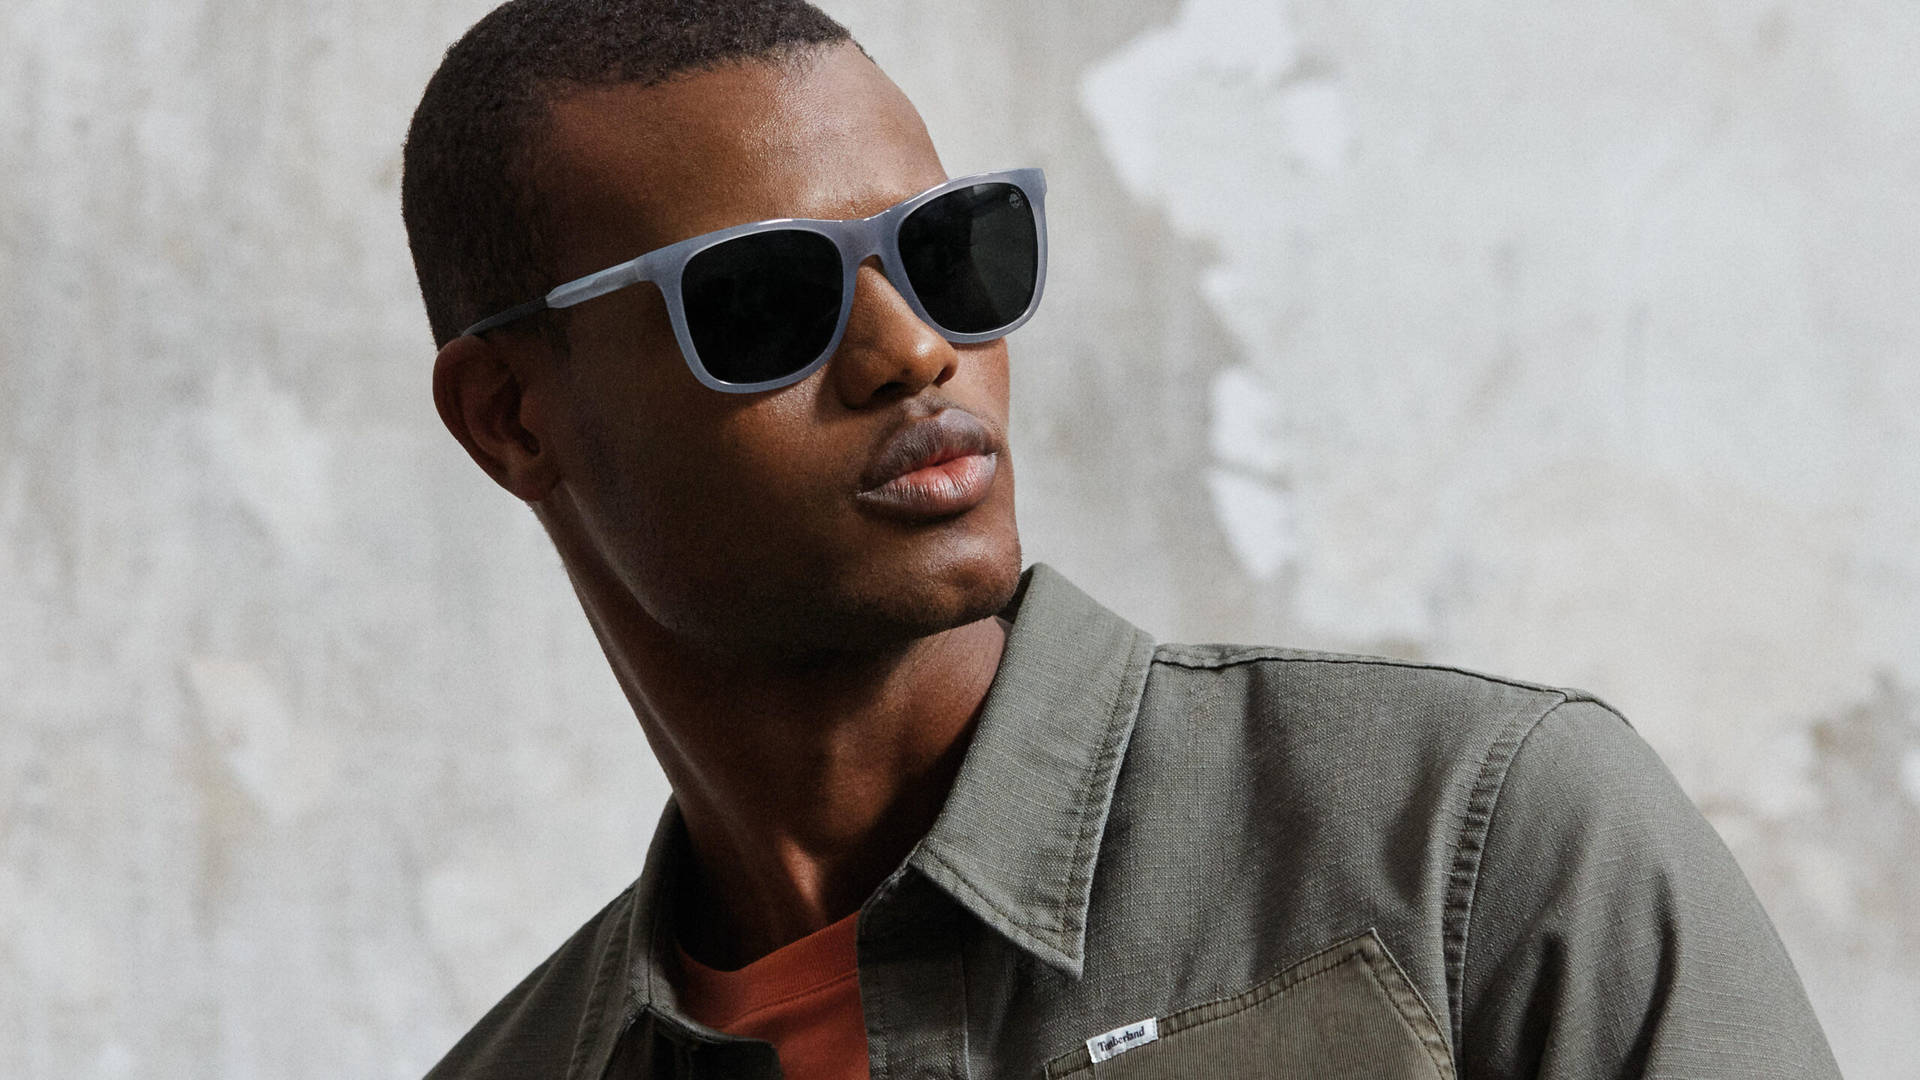 Timberland Sunglasses Male Model Wallpaper